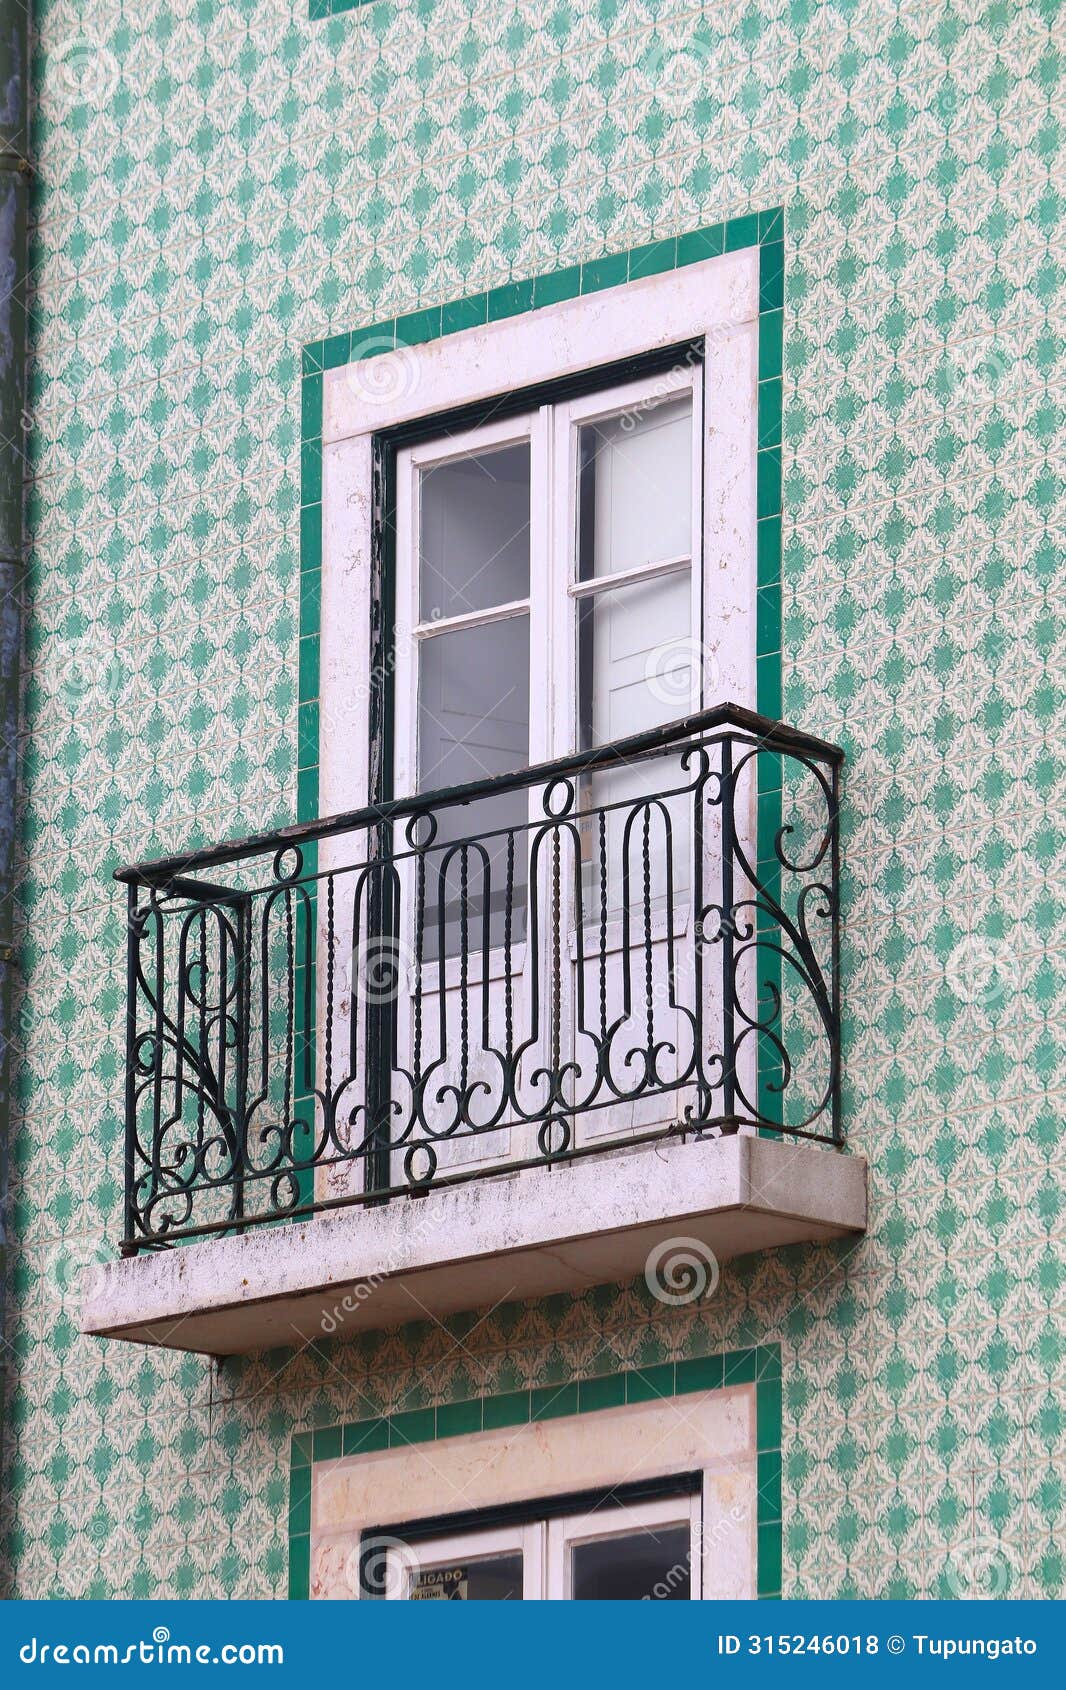 green azulejos tiles in lisbon, portugal